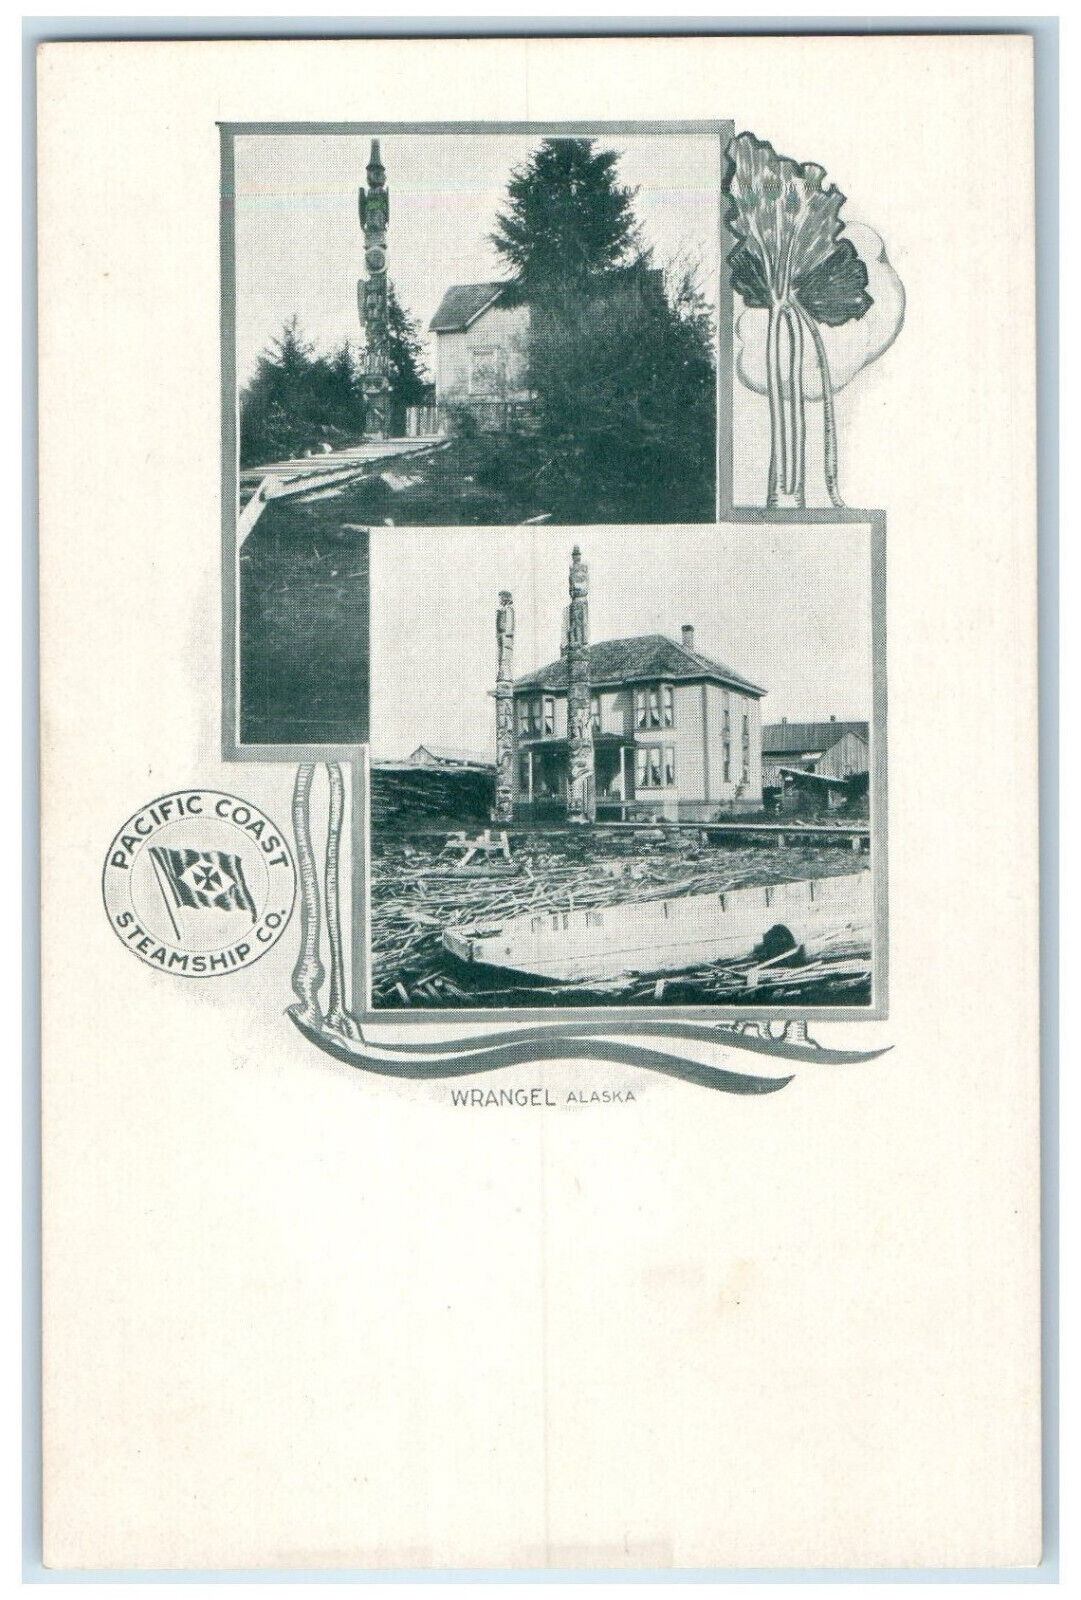 c1905 Wrangell Alaska Pacific Coast Steamship Co. Multiview Antique Postcard